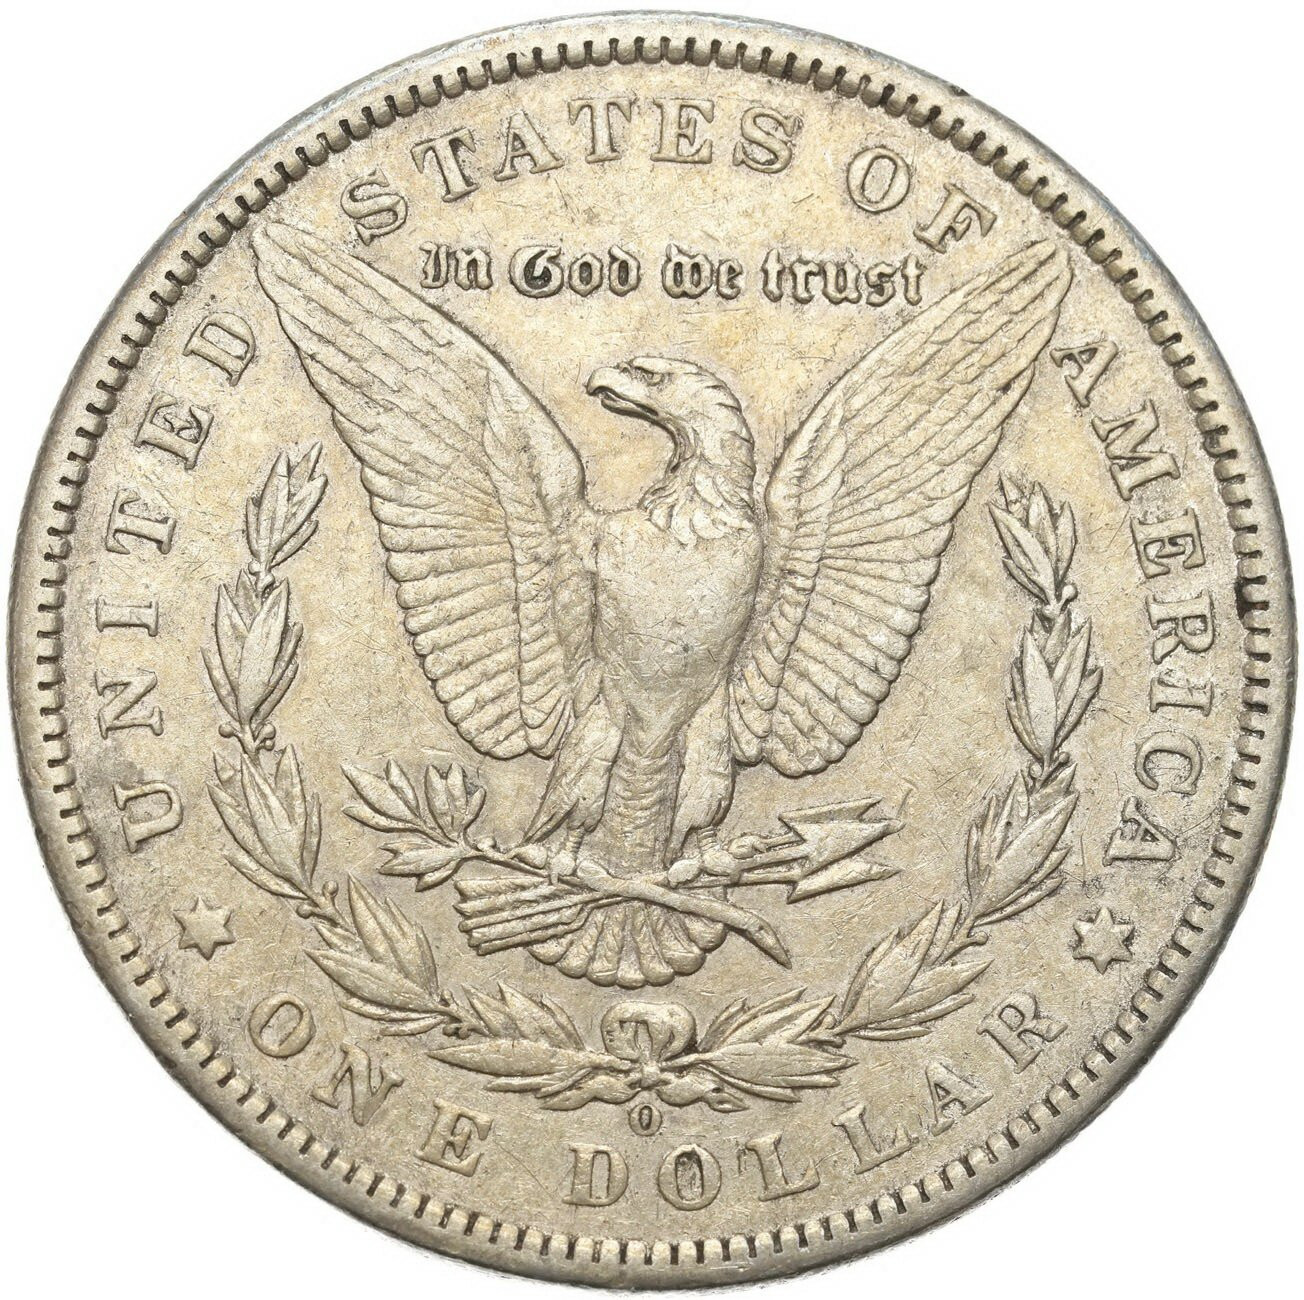 USA 1 dolar 1897 O, New Orleans 